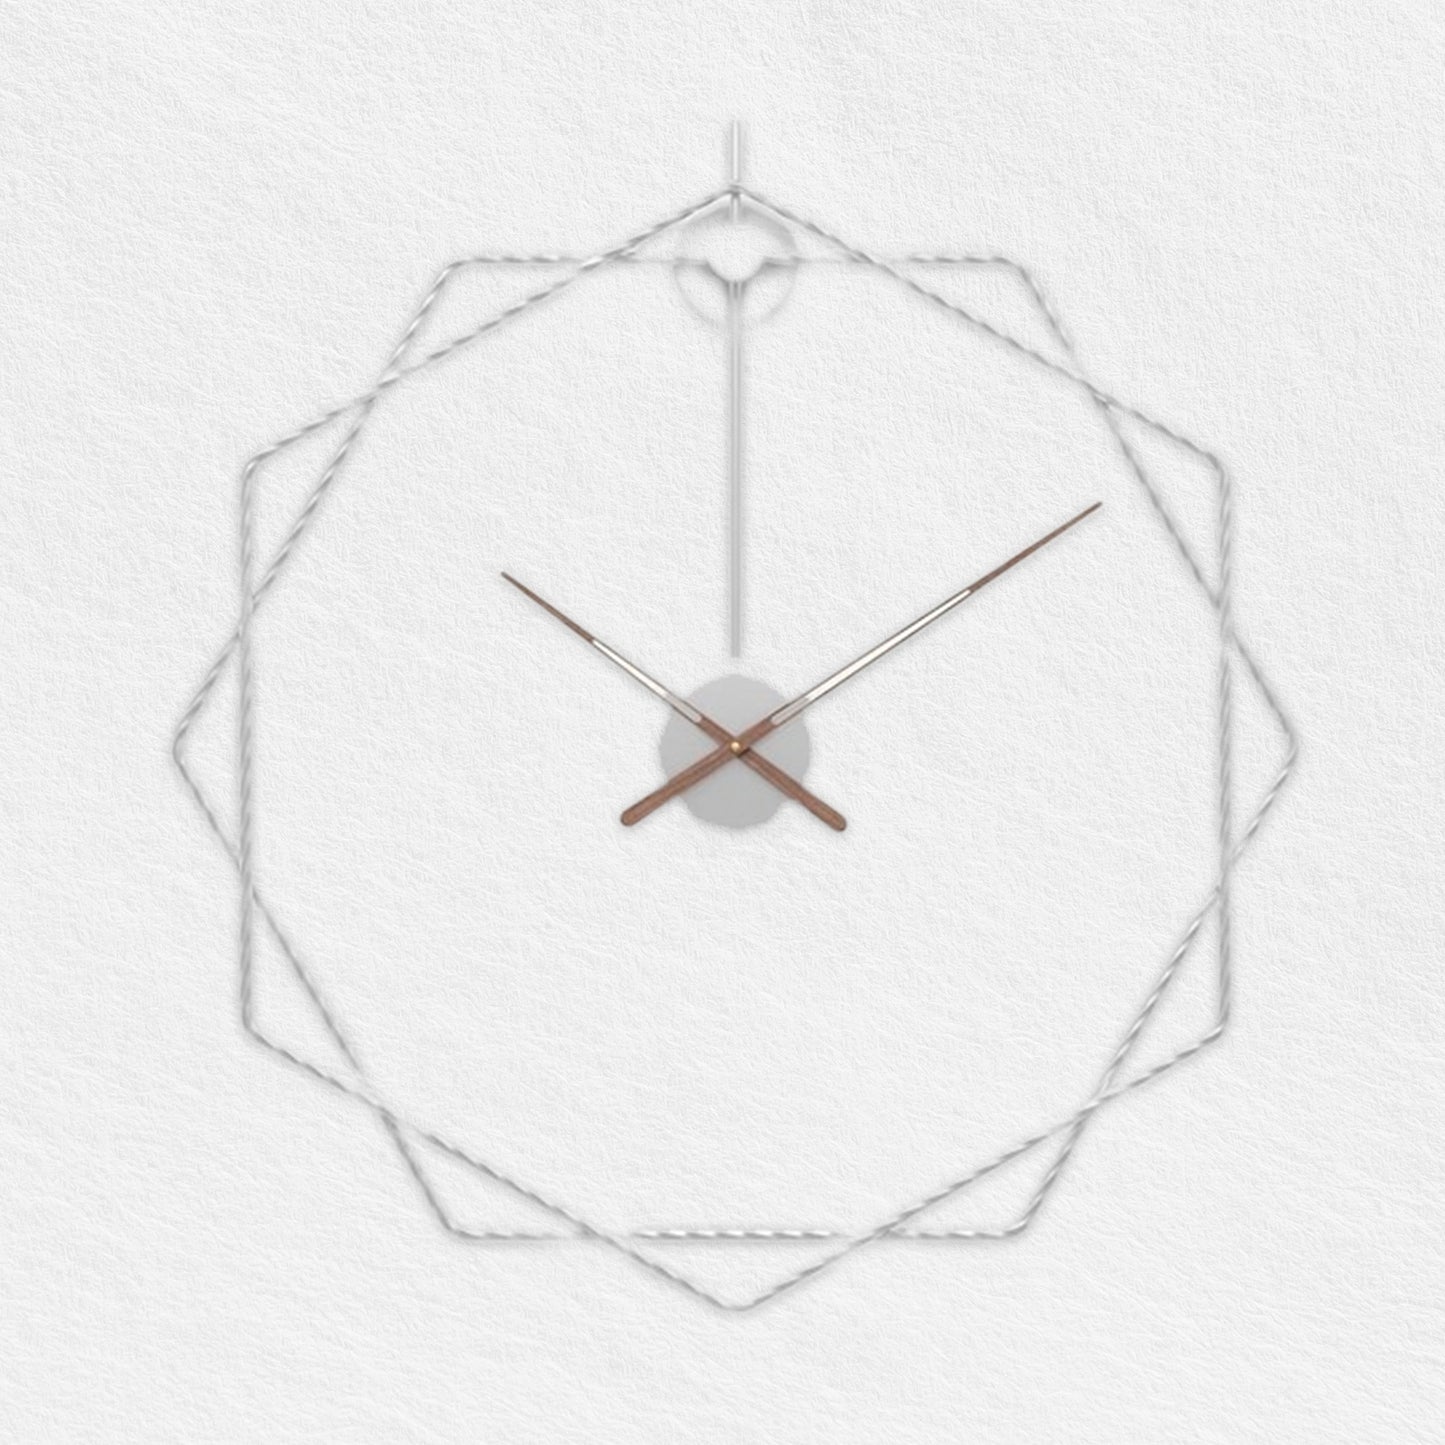 Hexagonal Wall Clock